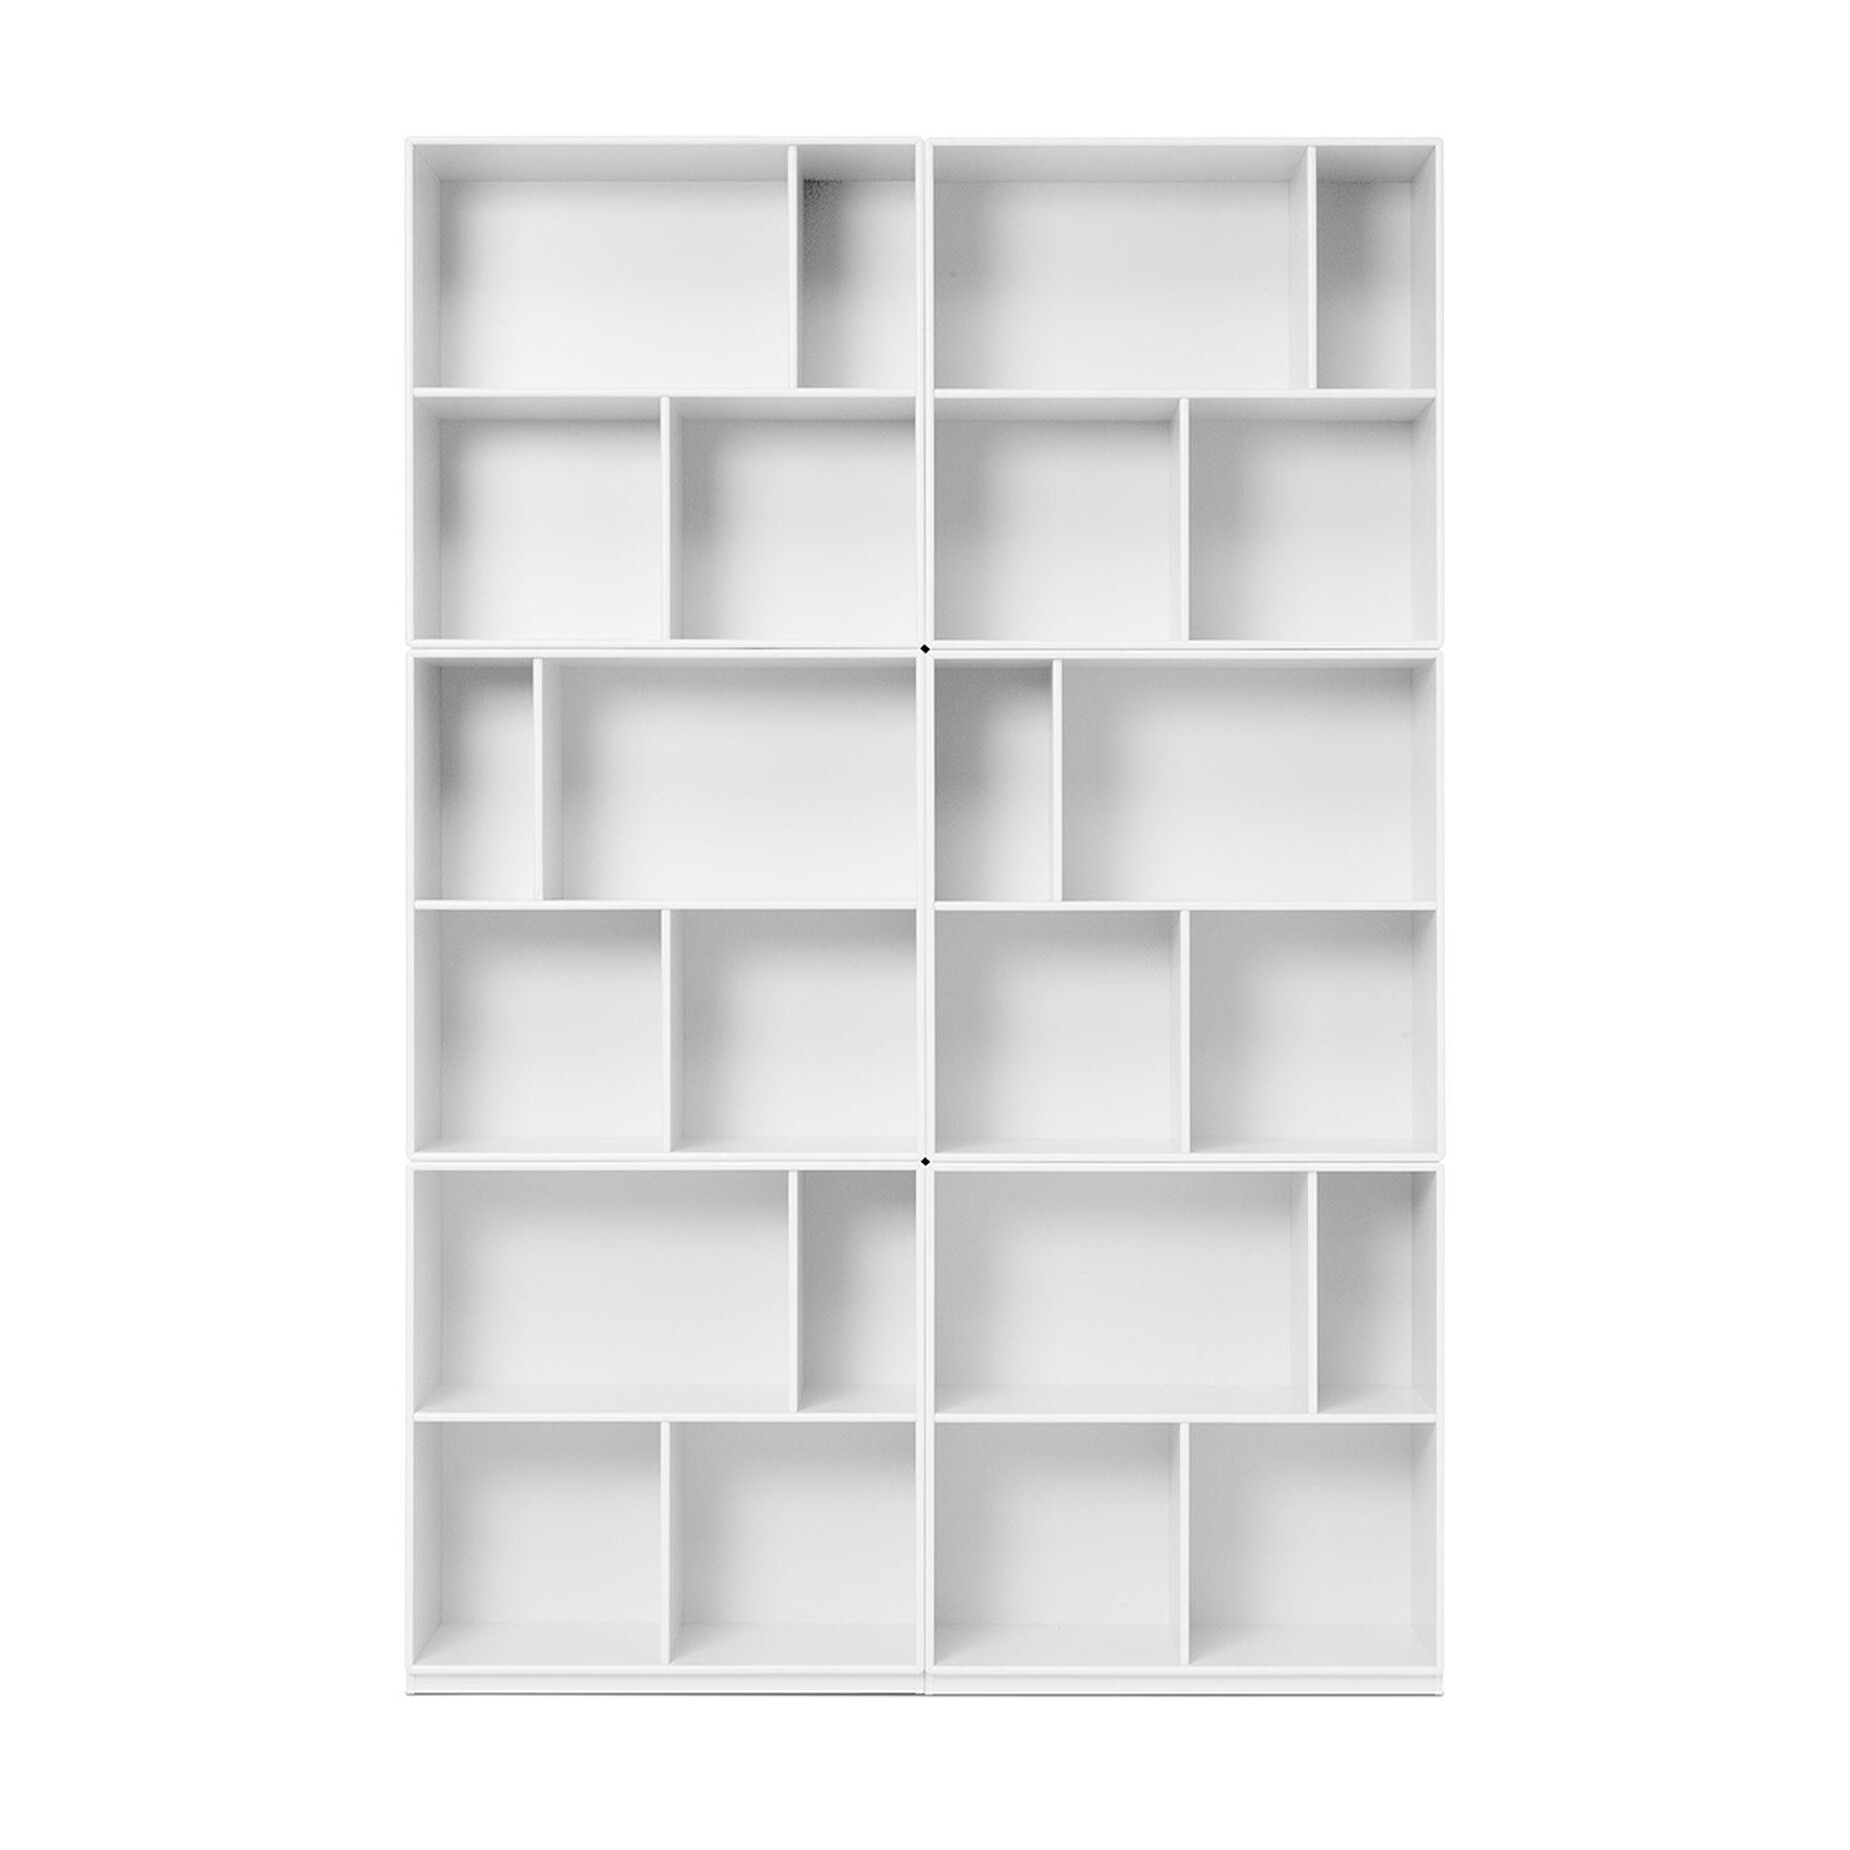 Montana Read Book Shelf 211 8x139 2cm Ambientedirect